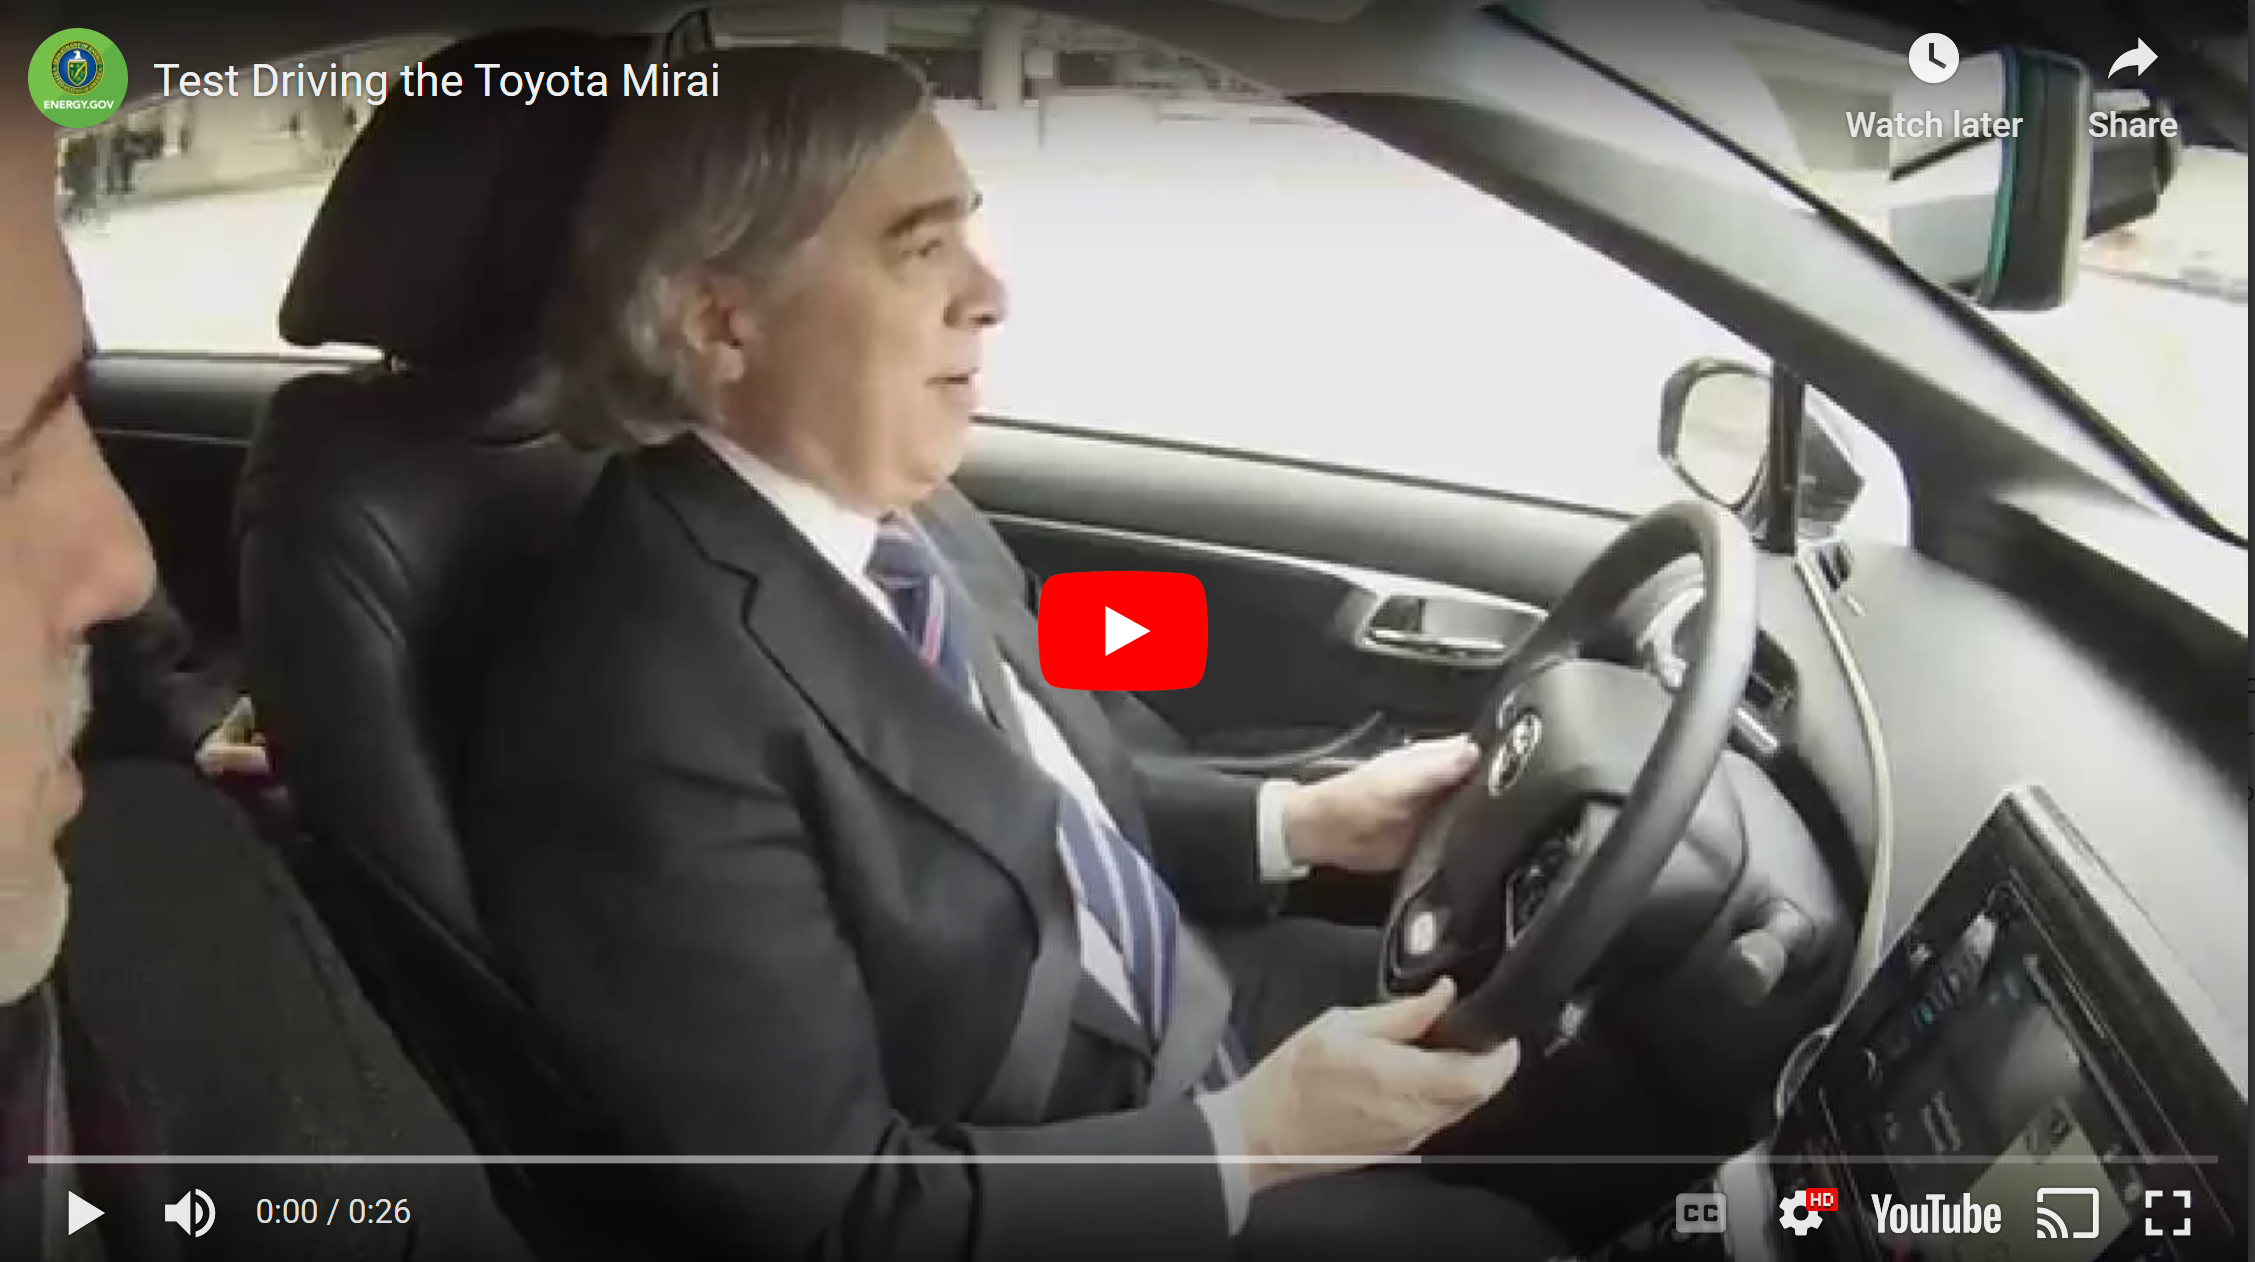 Energy Secretary Moniz drives the Toyota Mirai